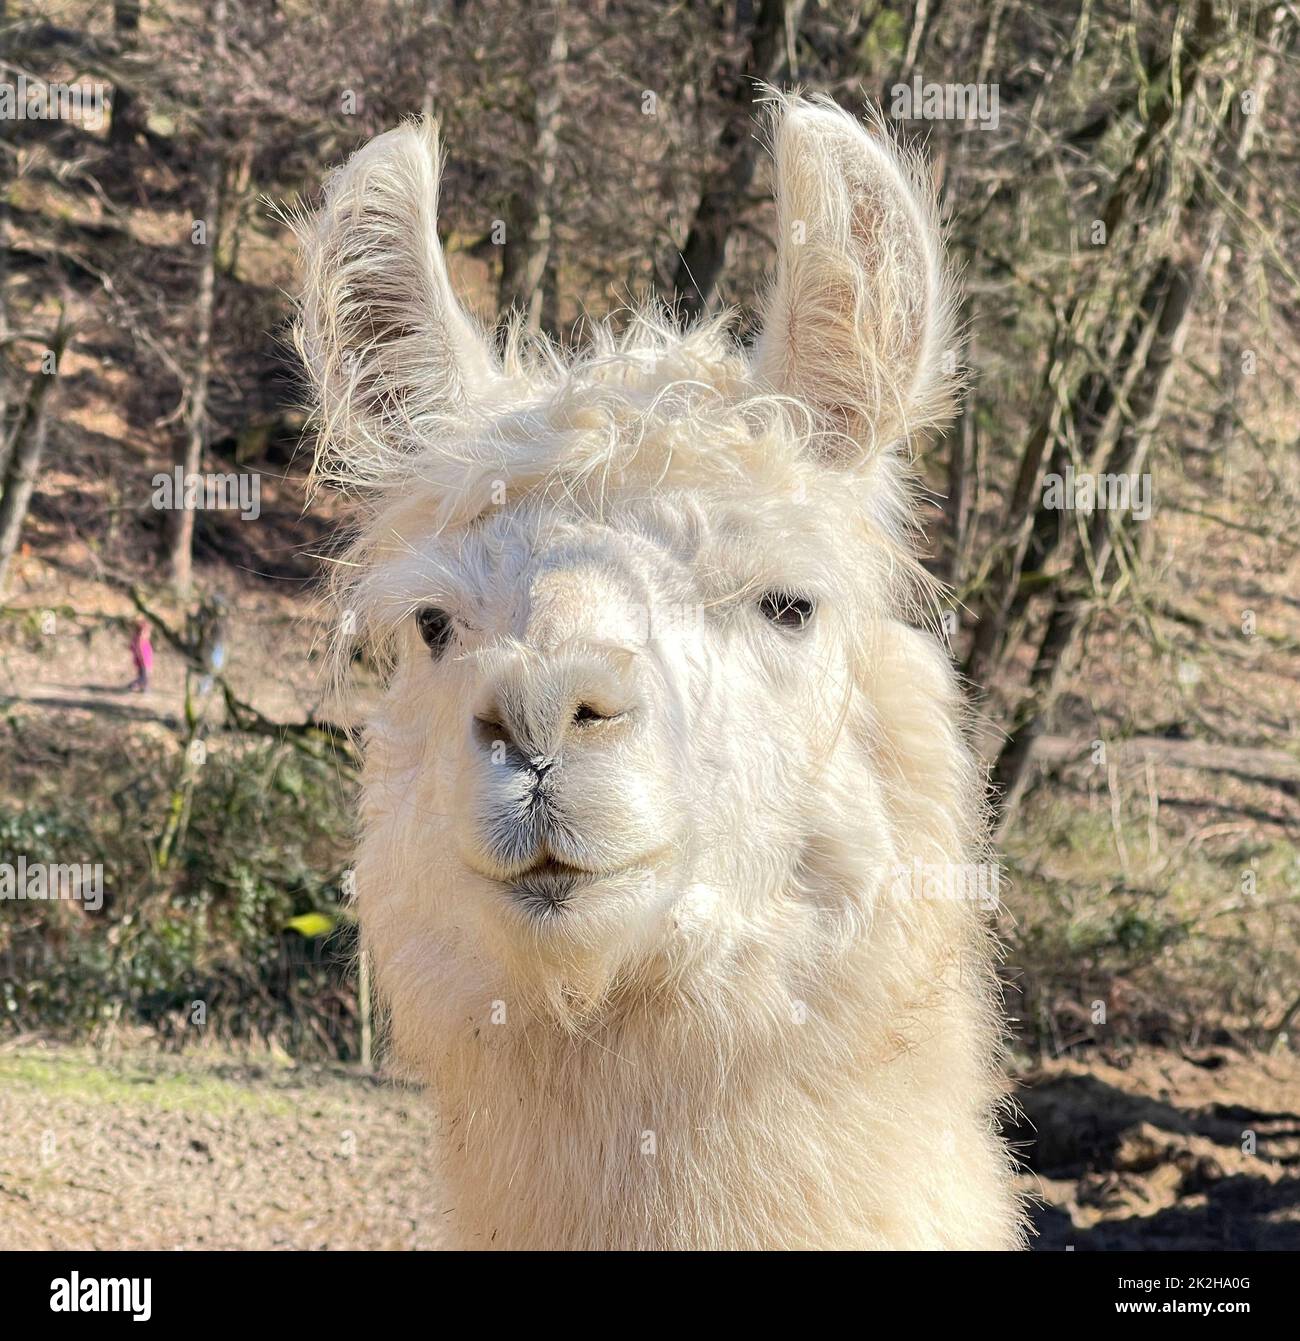 Lama Glama, Alpaca Foto de stock